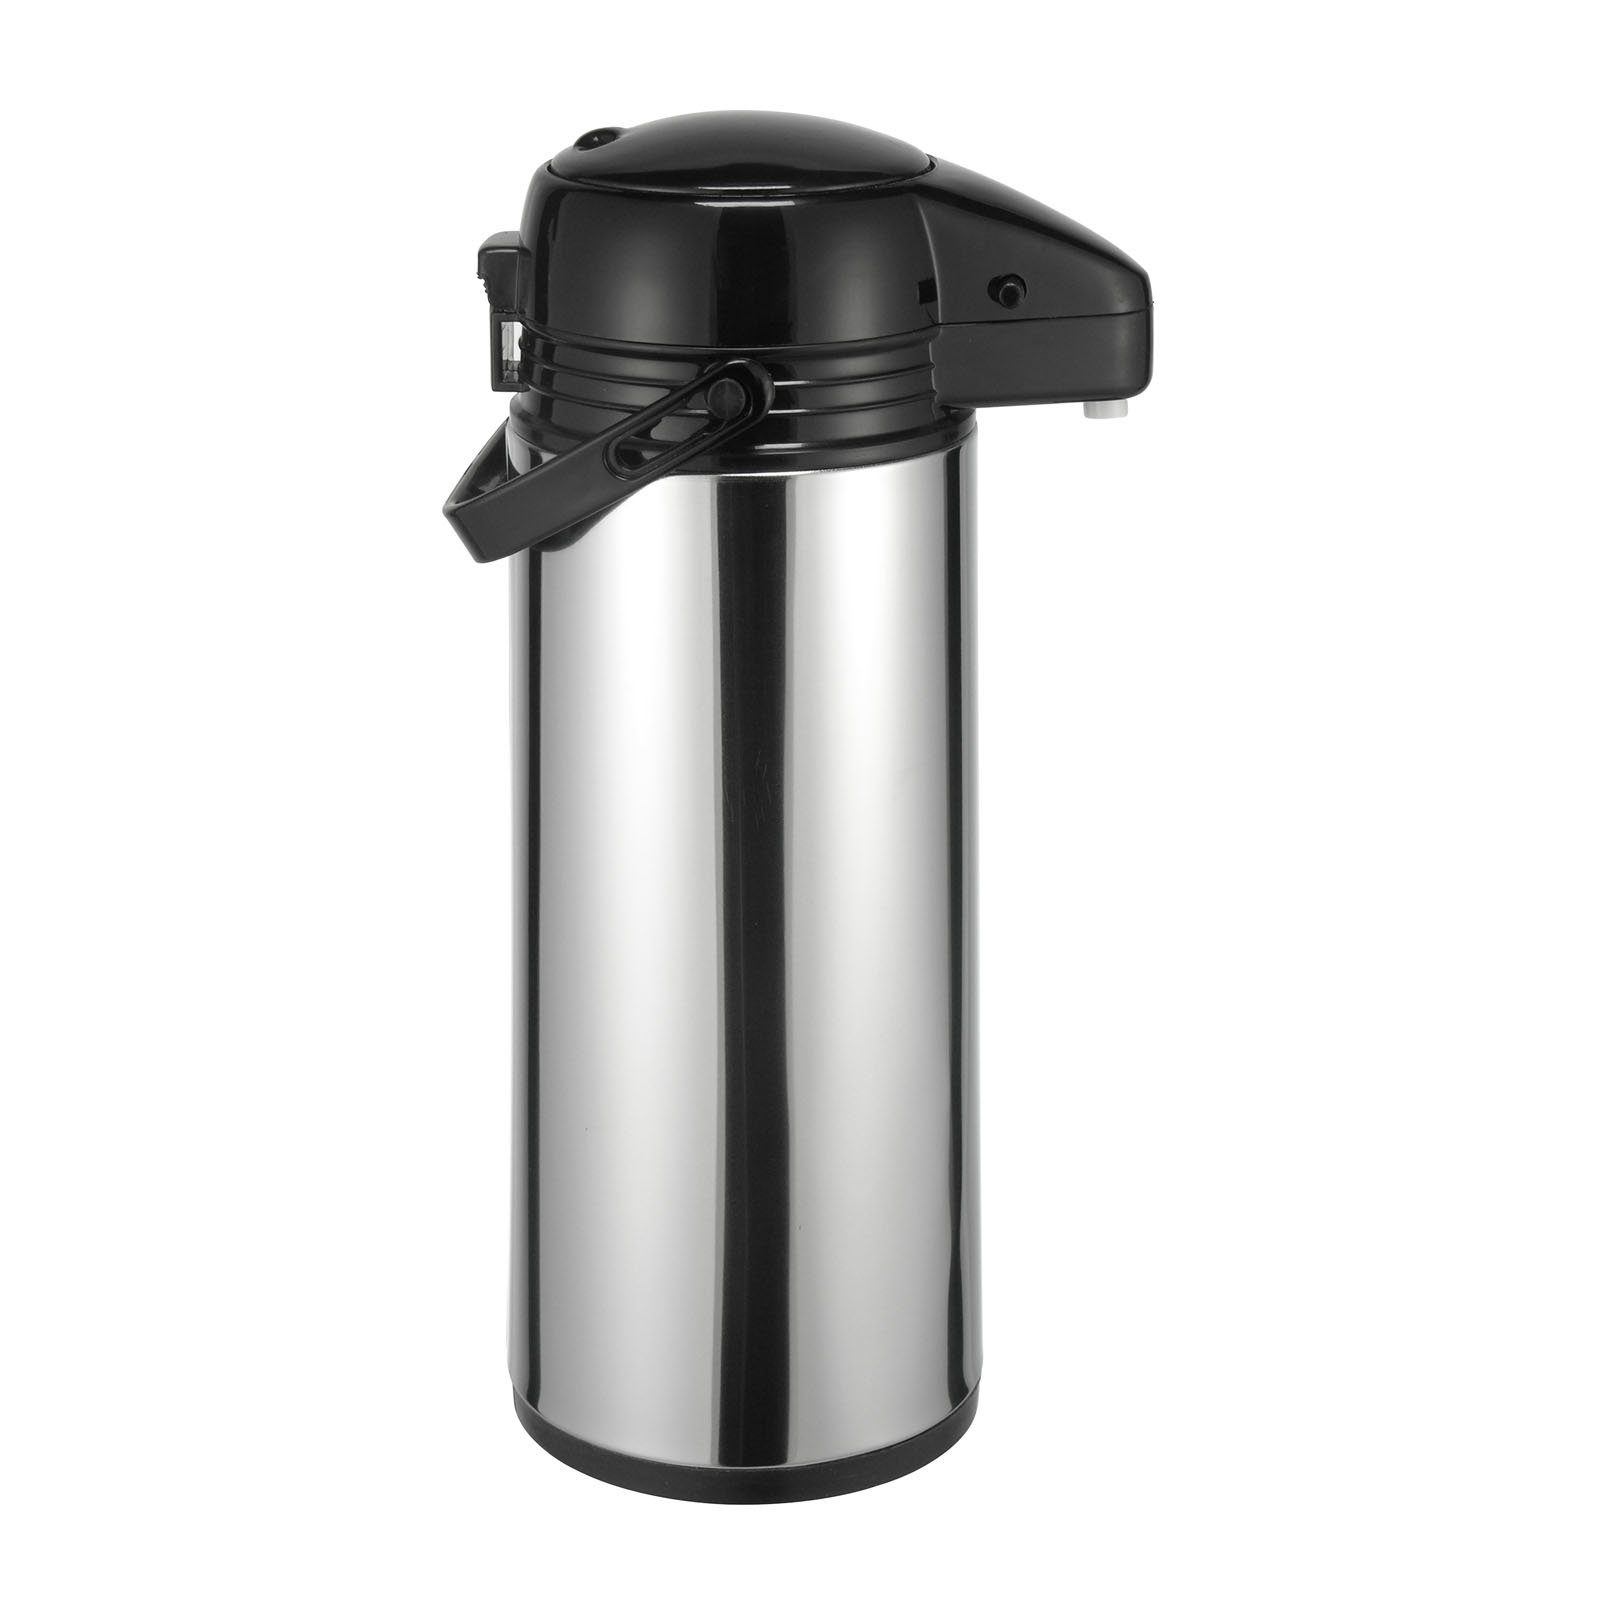 HAC24 Pump-Isolierkanne Thermoskanne Kaffeekanne Isolierkanne Teekanne Thermo Kaffee Tee Kanne Airpot Pumpkanne, 1,9 l, Edelstahl, Mit Pumpmechanismus & Tragegriff